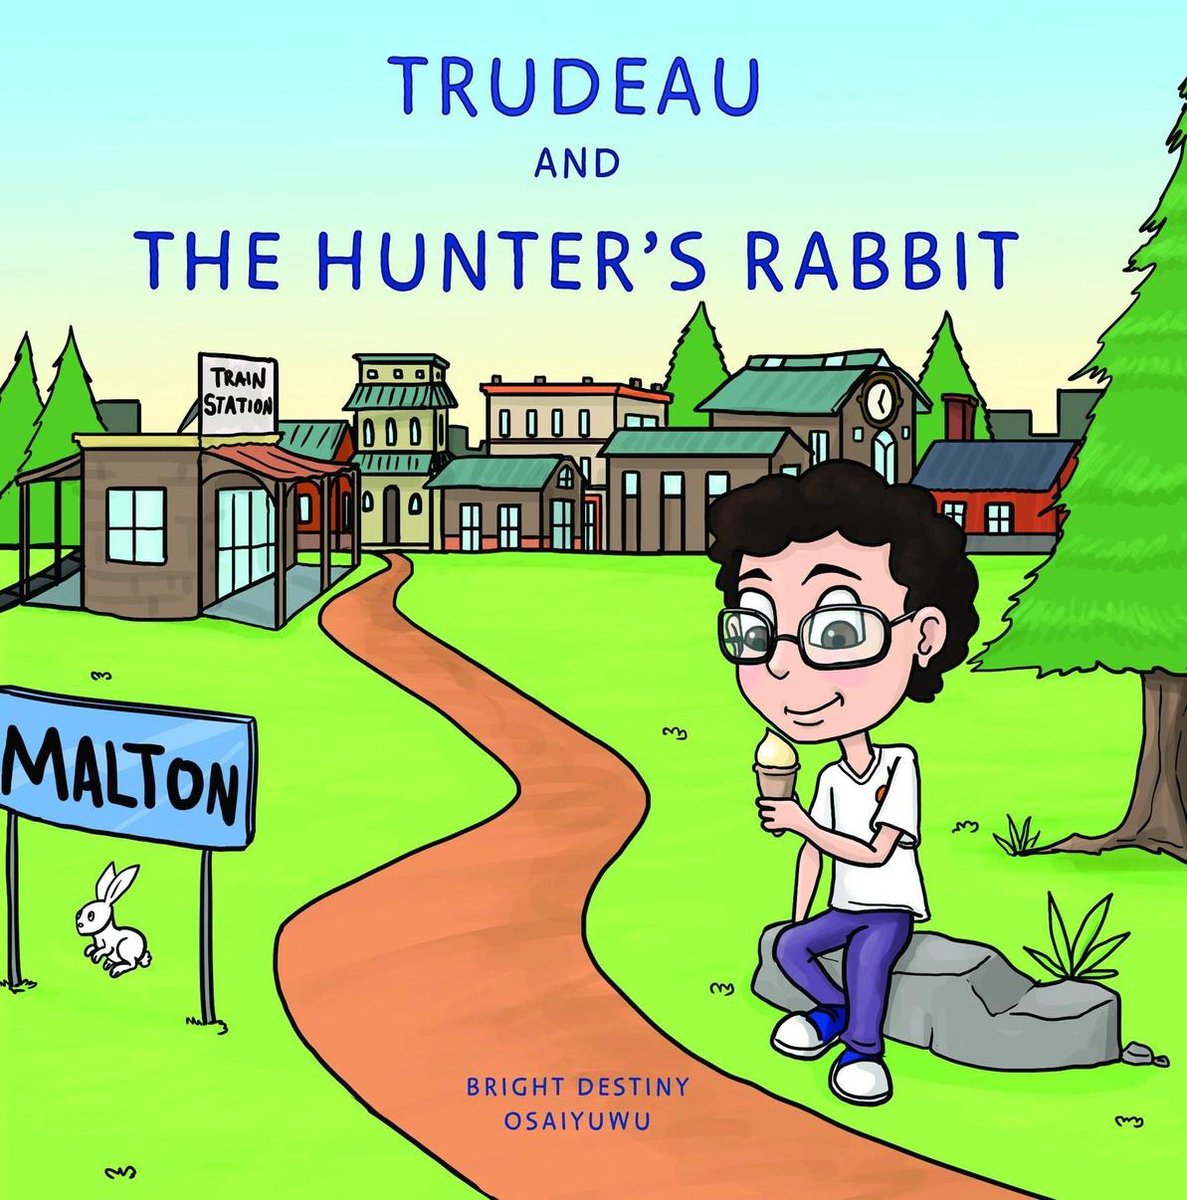 Trudeau and The Hunter's Rabbit - Bright Destiny Osaiyuwu